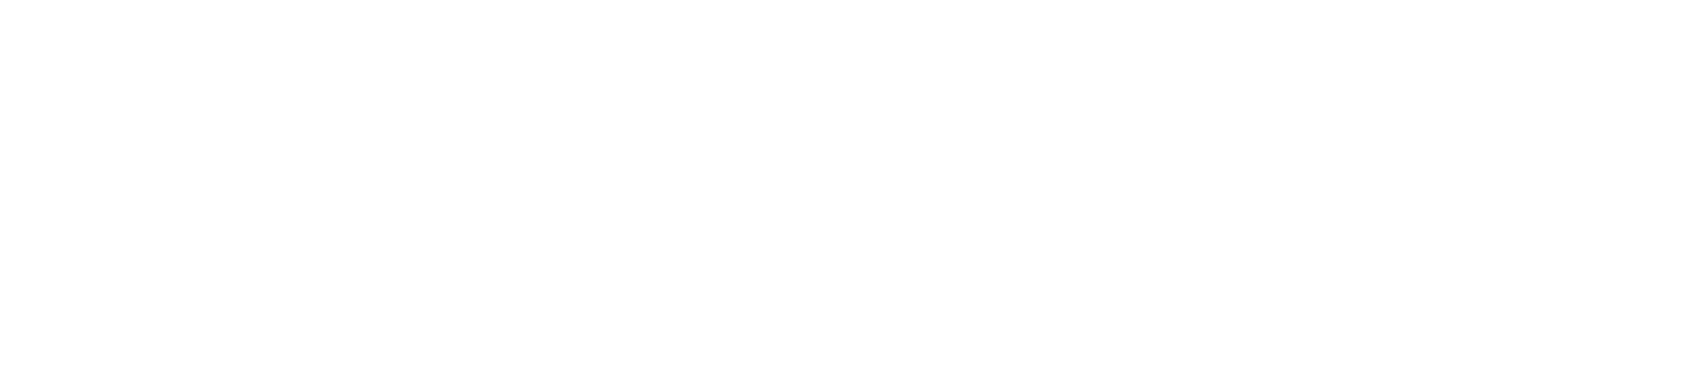 CSL Vifor Footer Logo